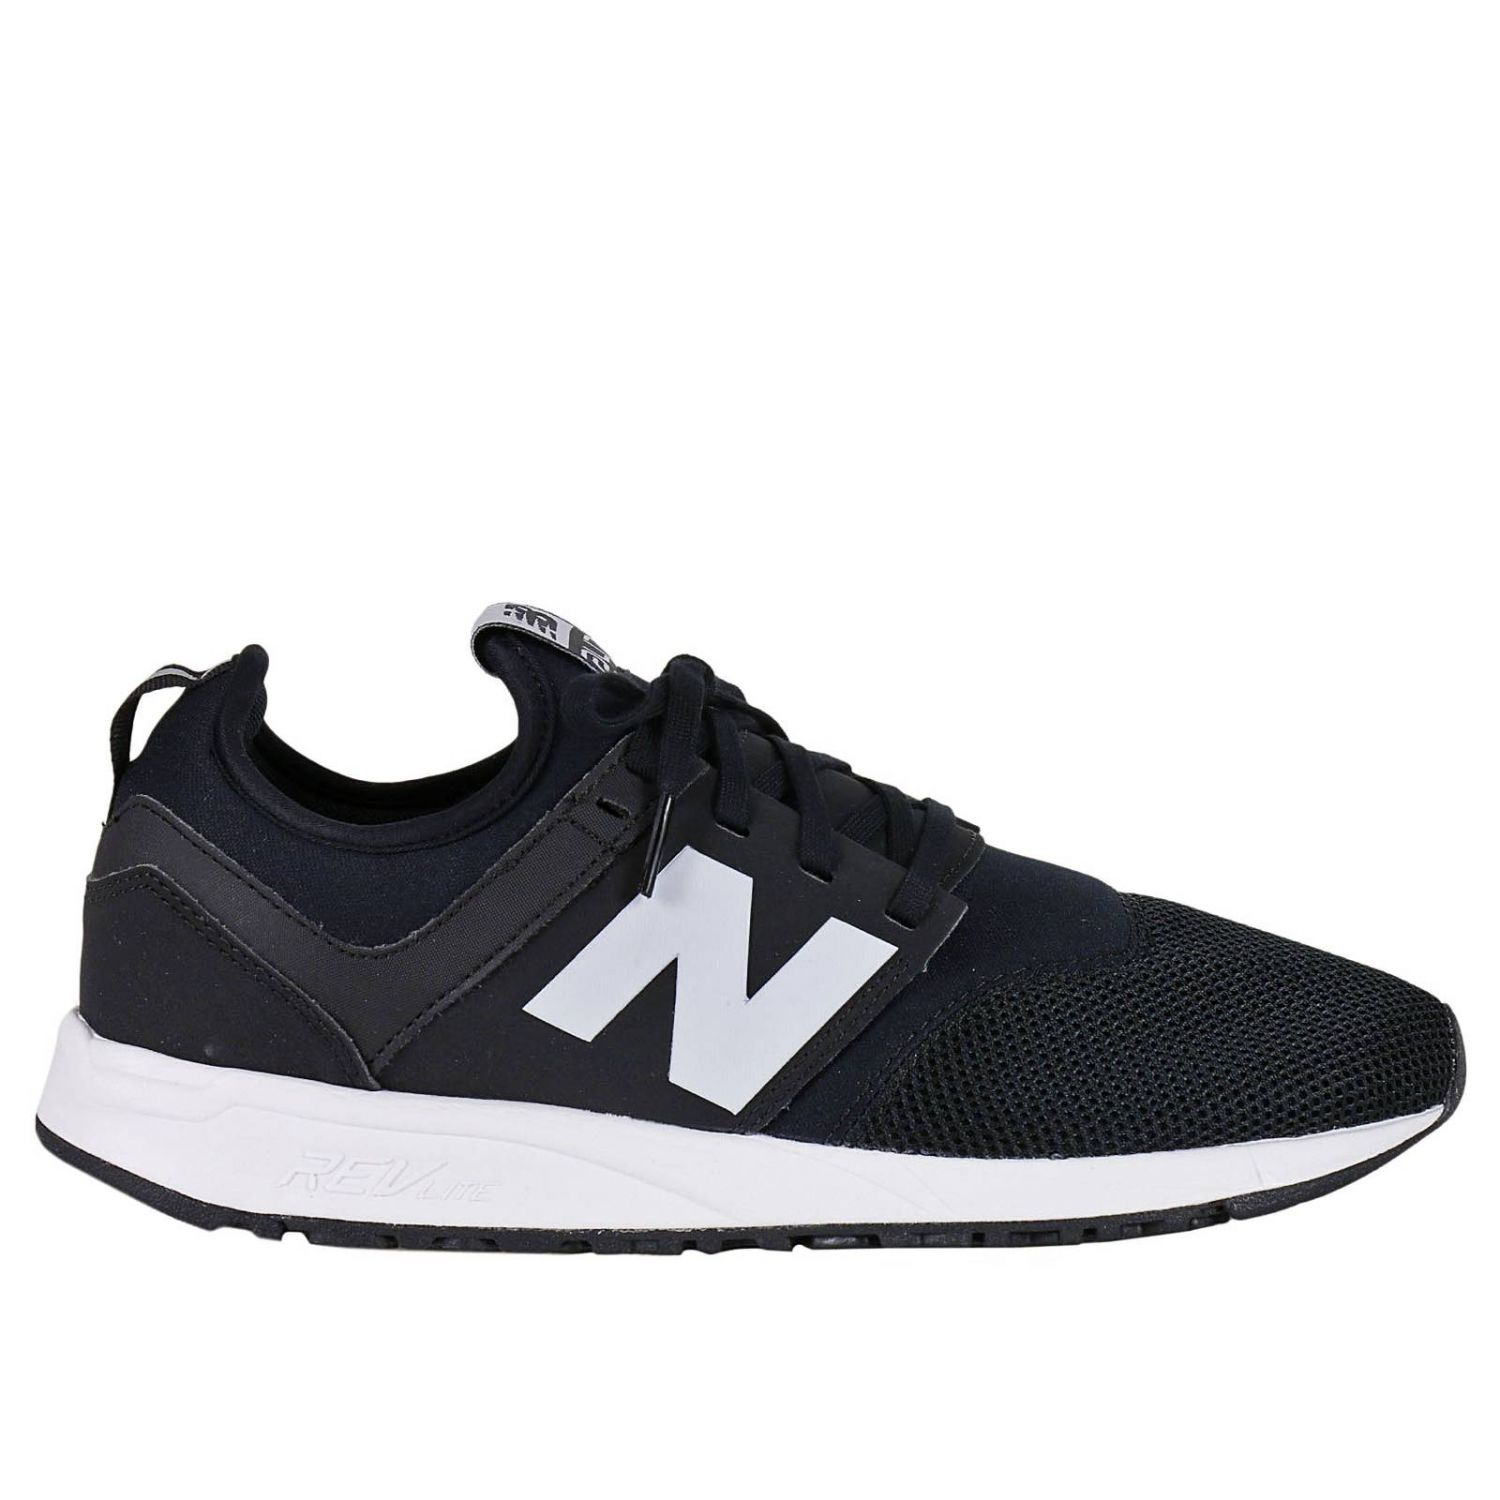 New Balance Outlet: Shoes men | Sneakers New Balance Men Black ...